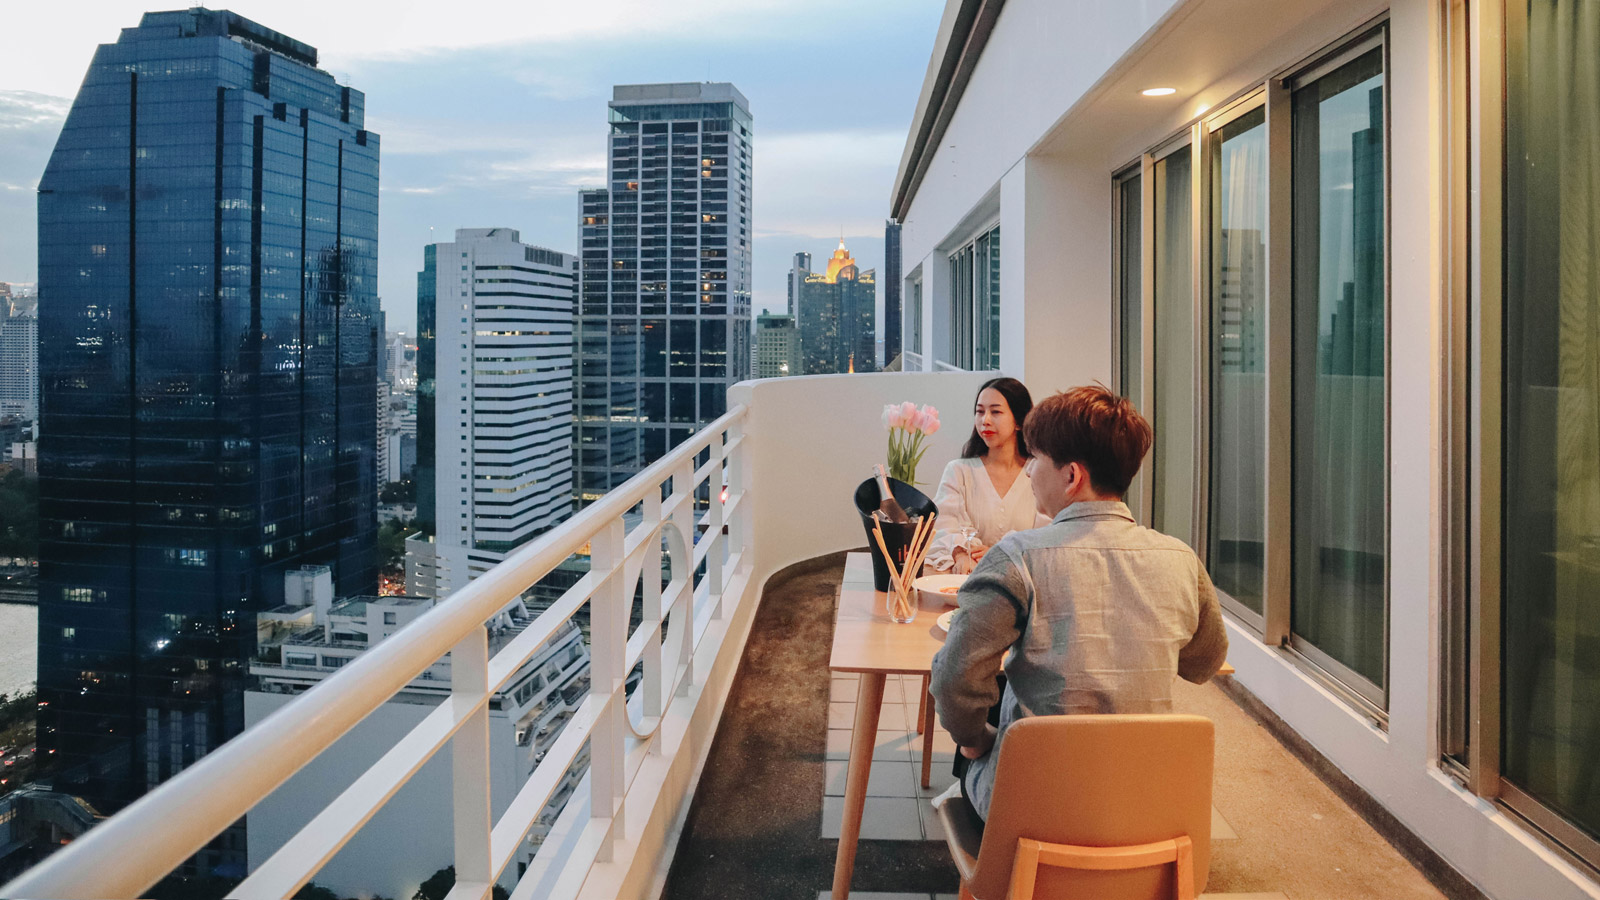 Studio Lakeview - Dinner on the balcony - 샤마 레이크뷰 아속 방콕